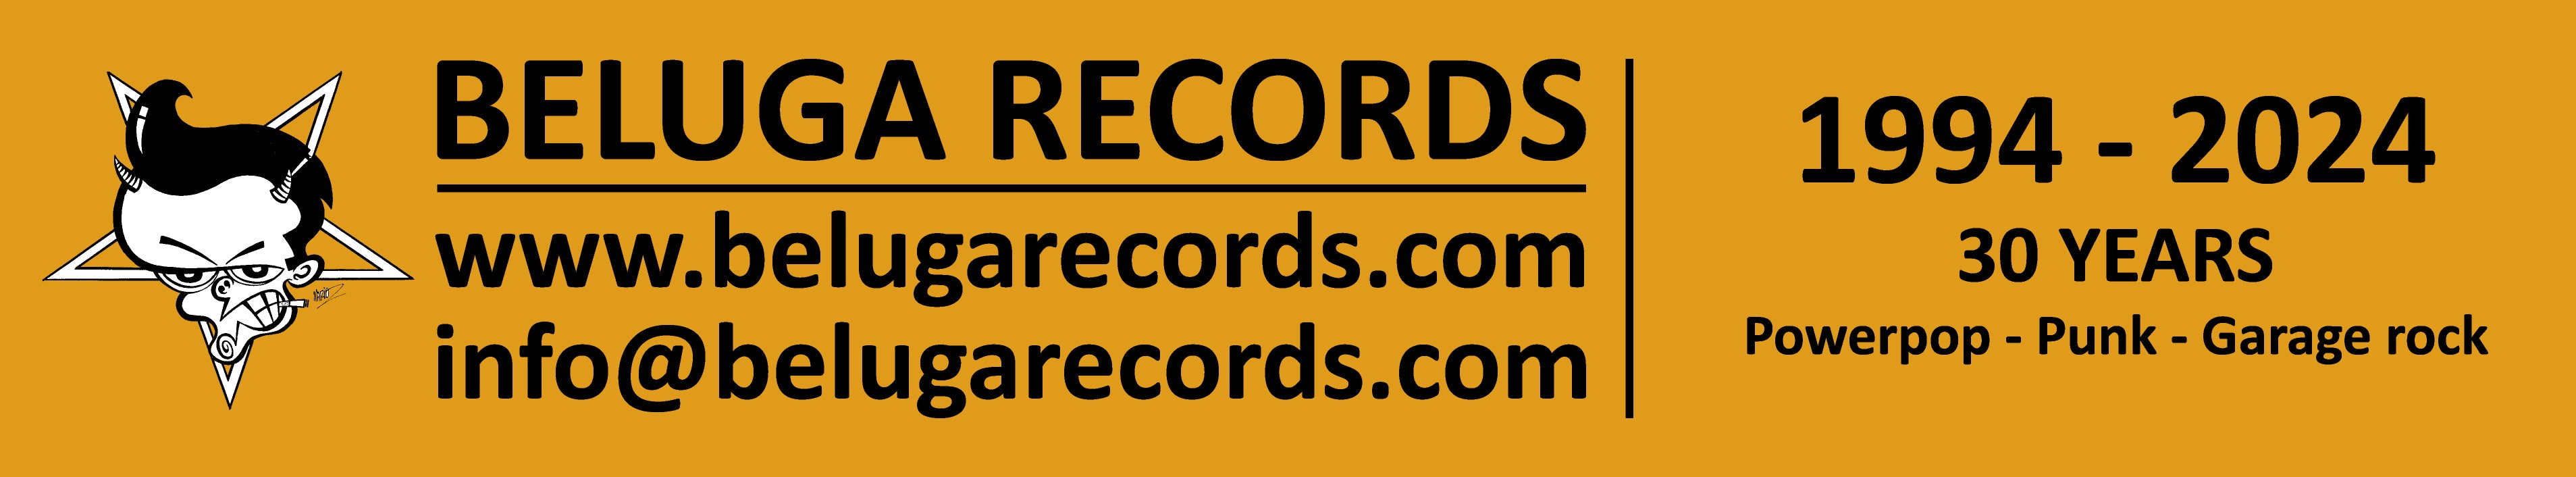 Beluga Records